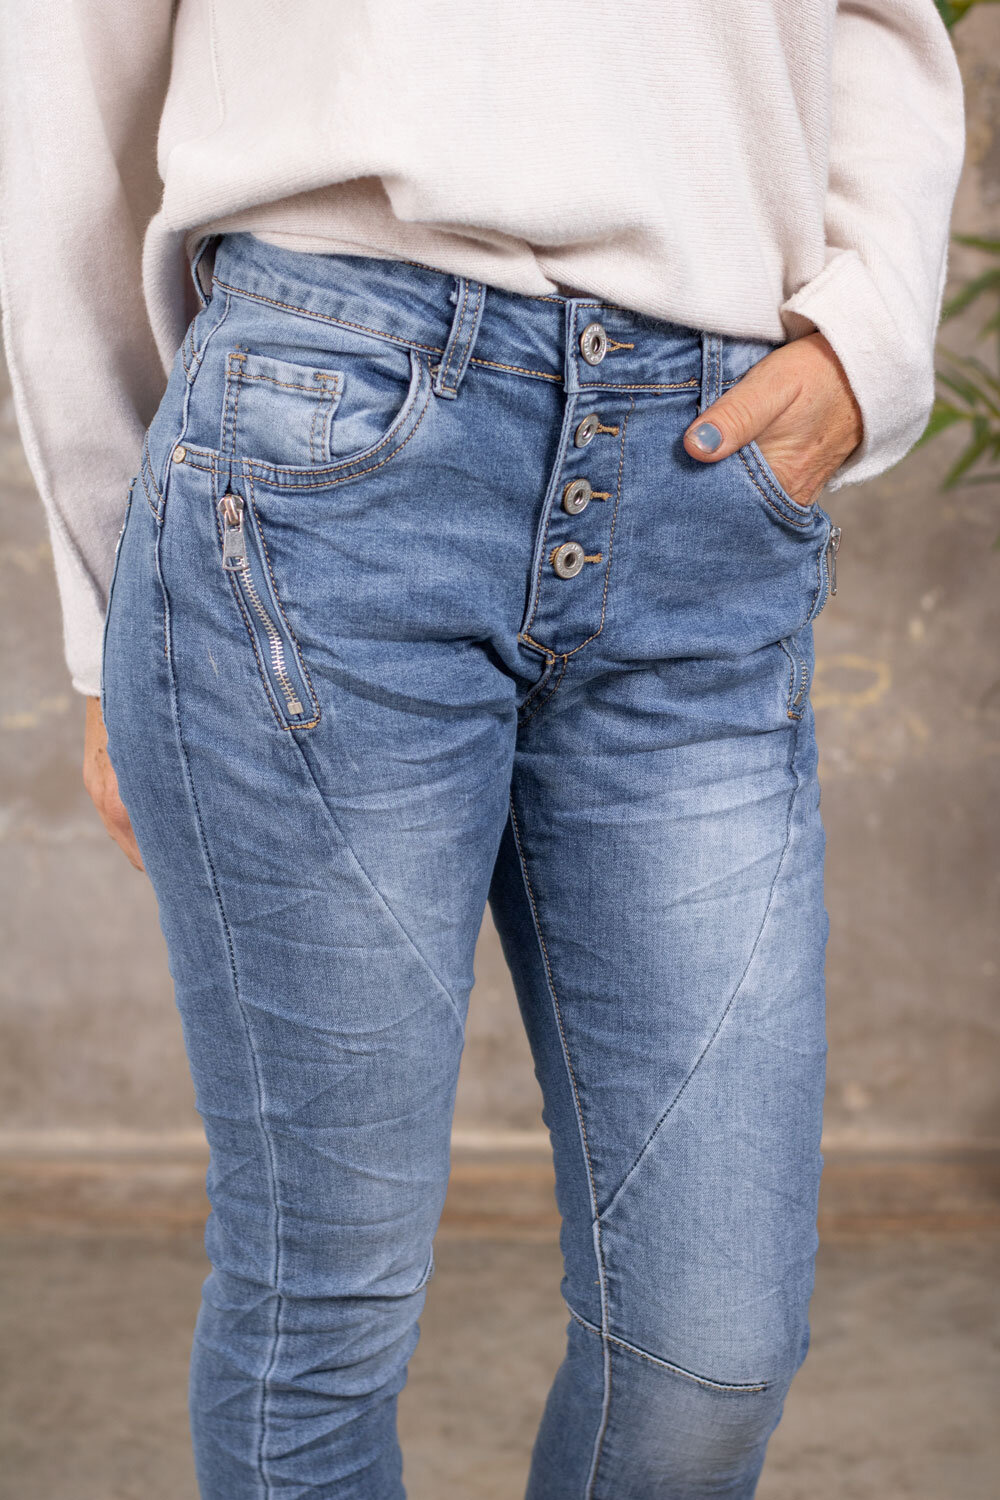 Jeans JW2229 - Zippers - Light wash